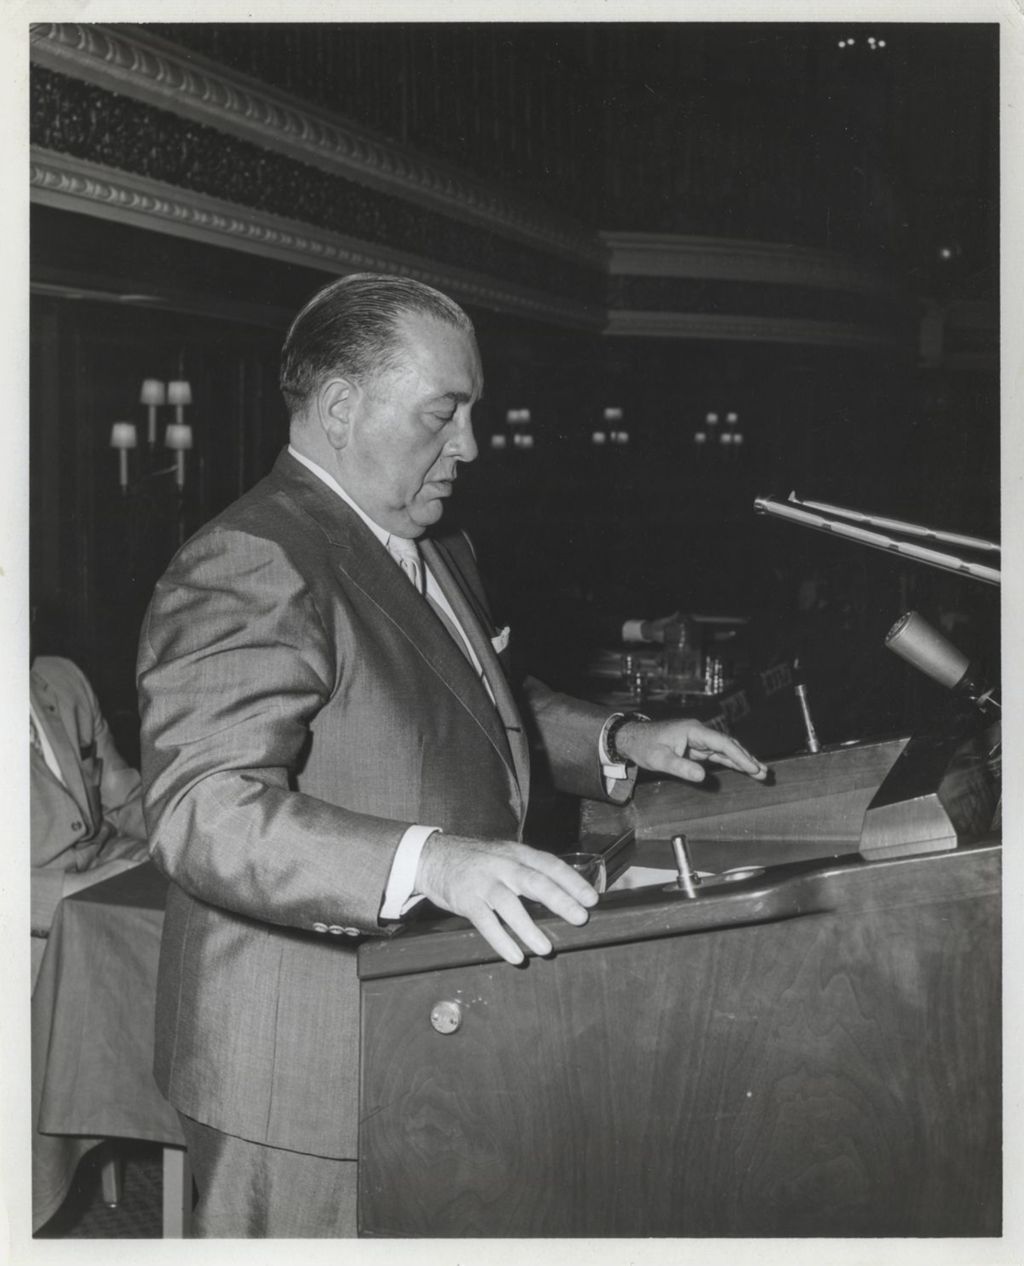 Richard J. Daley speaking at a podium